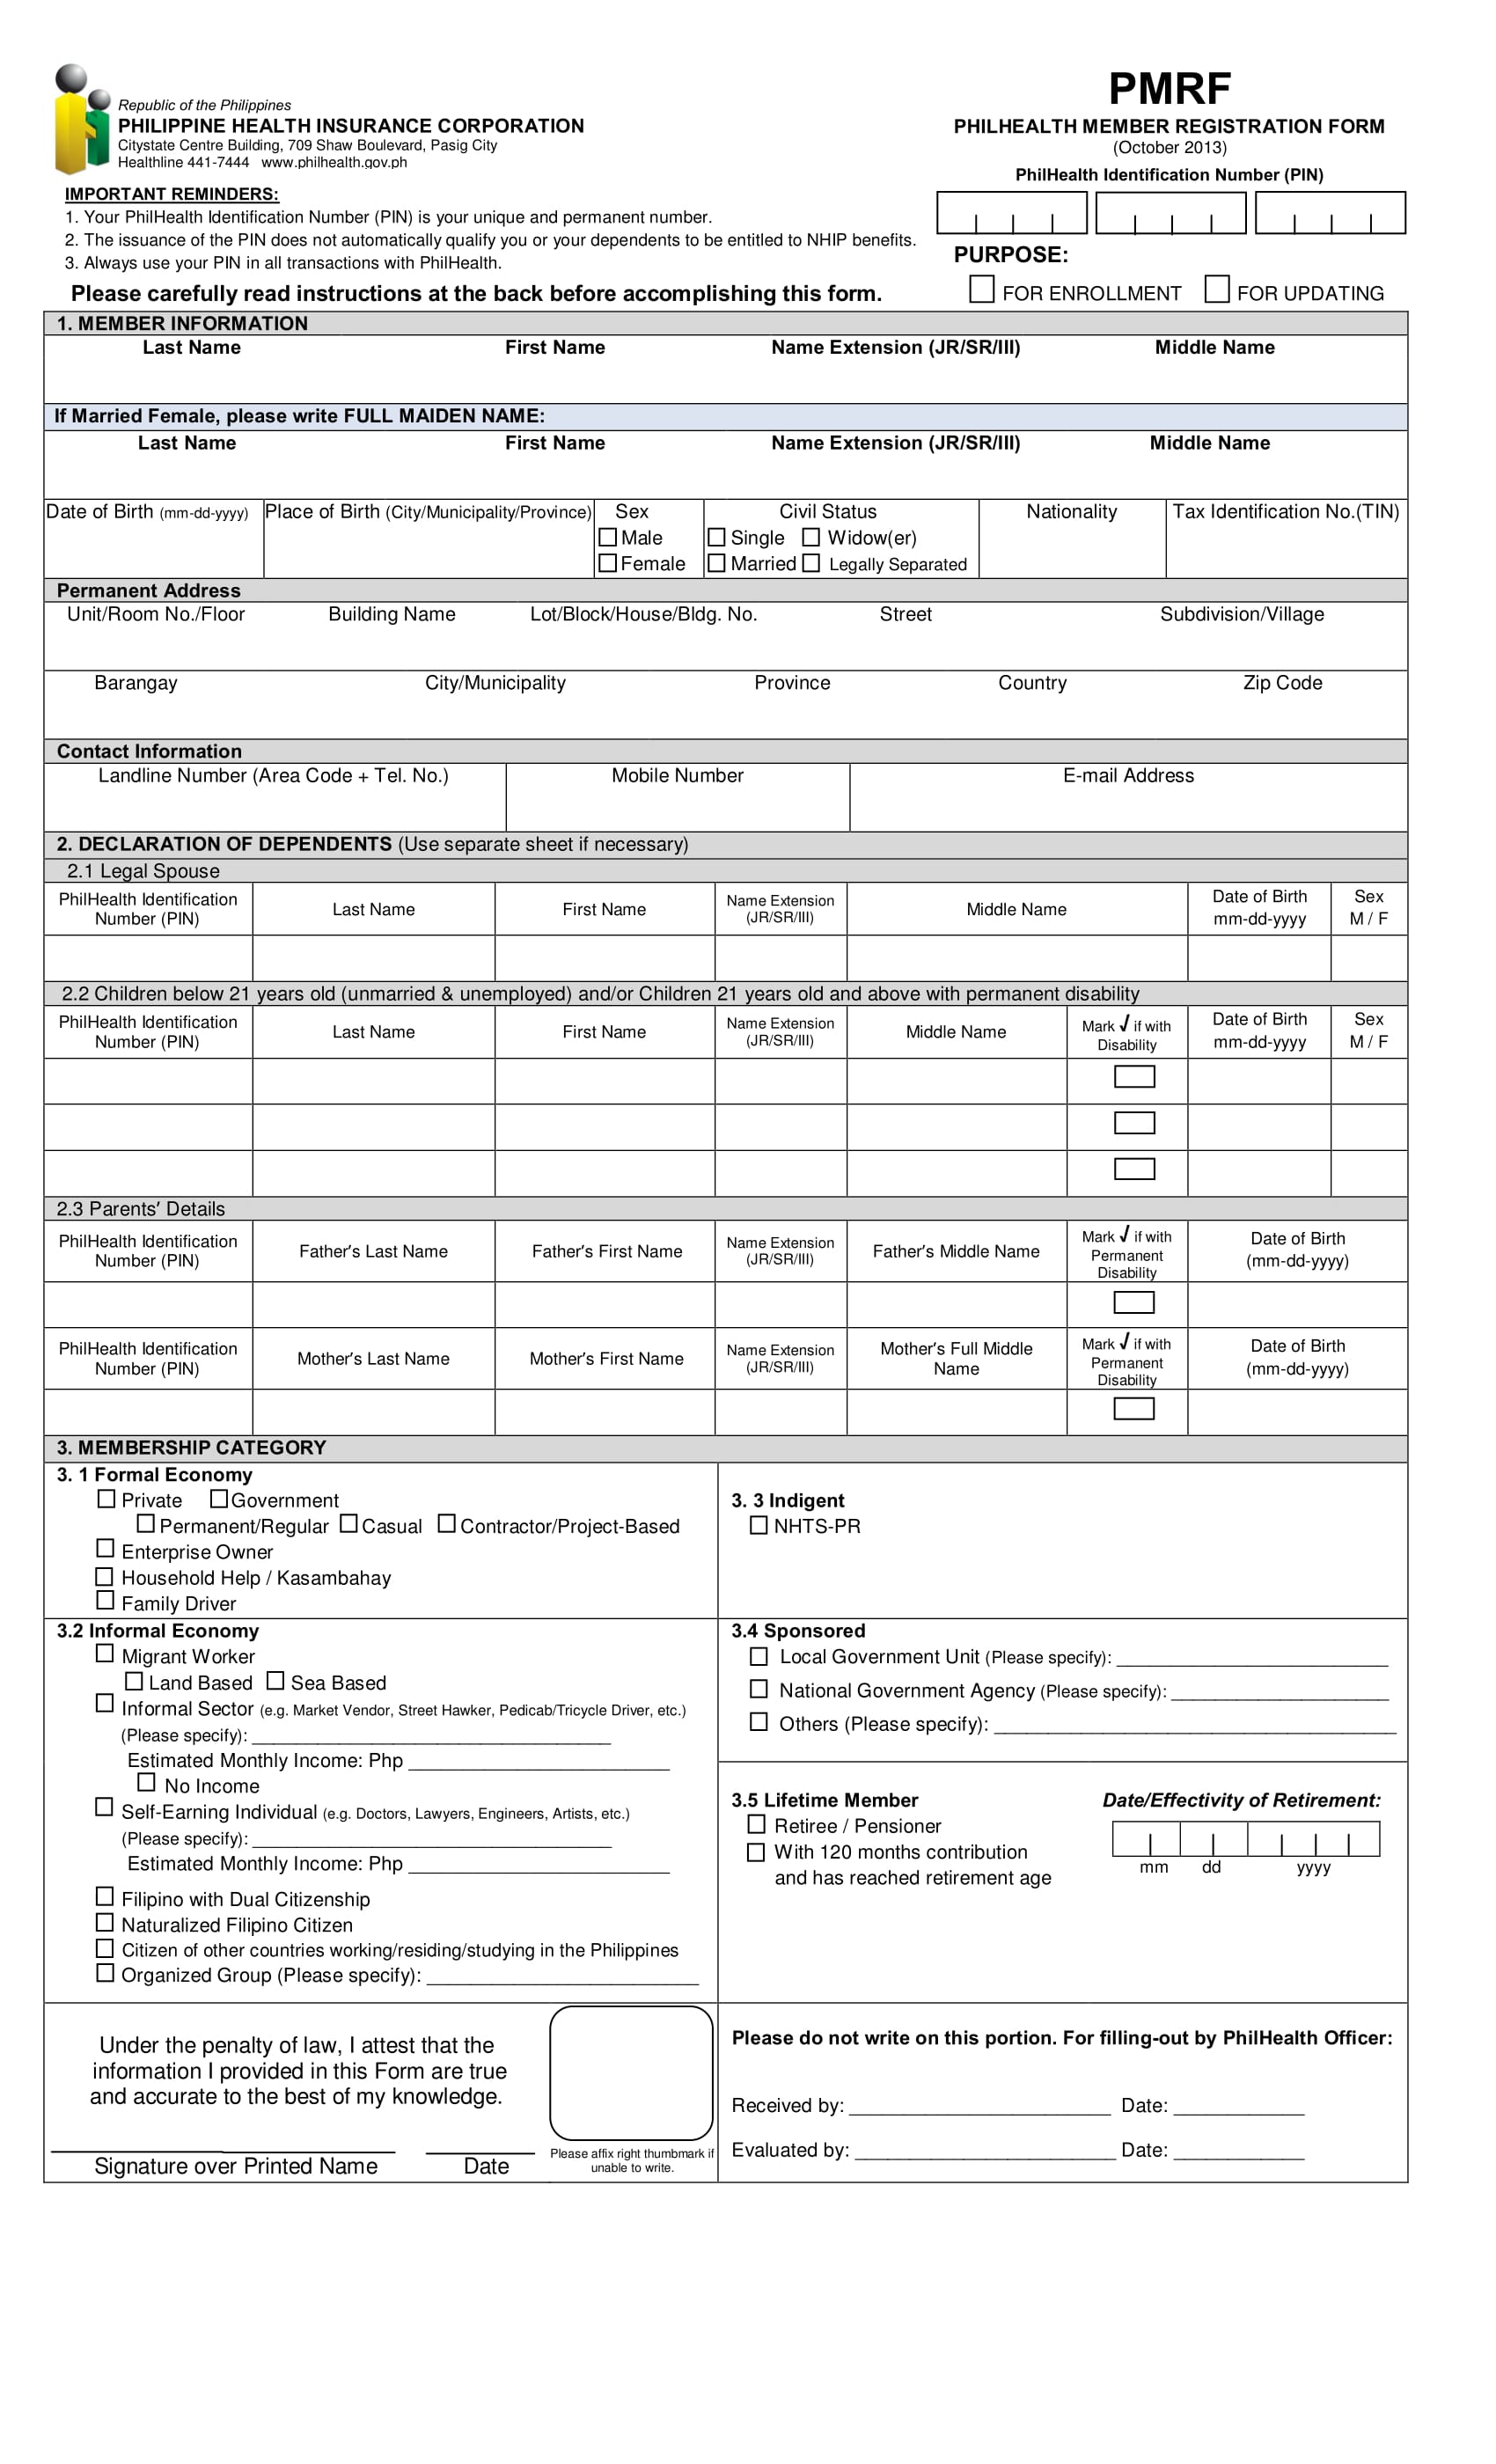 blank insurance member registration form 1